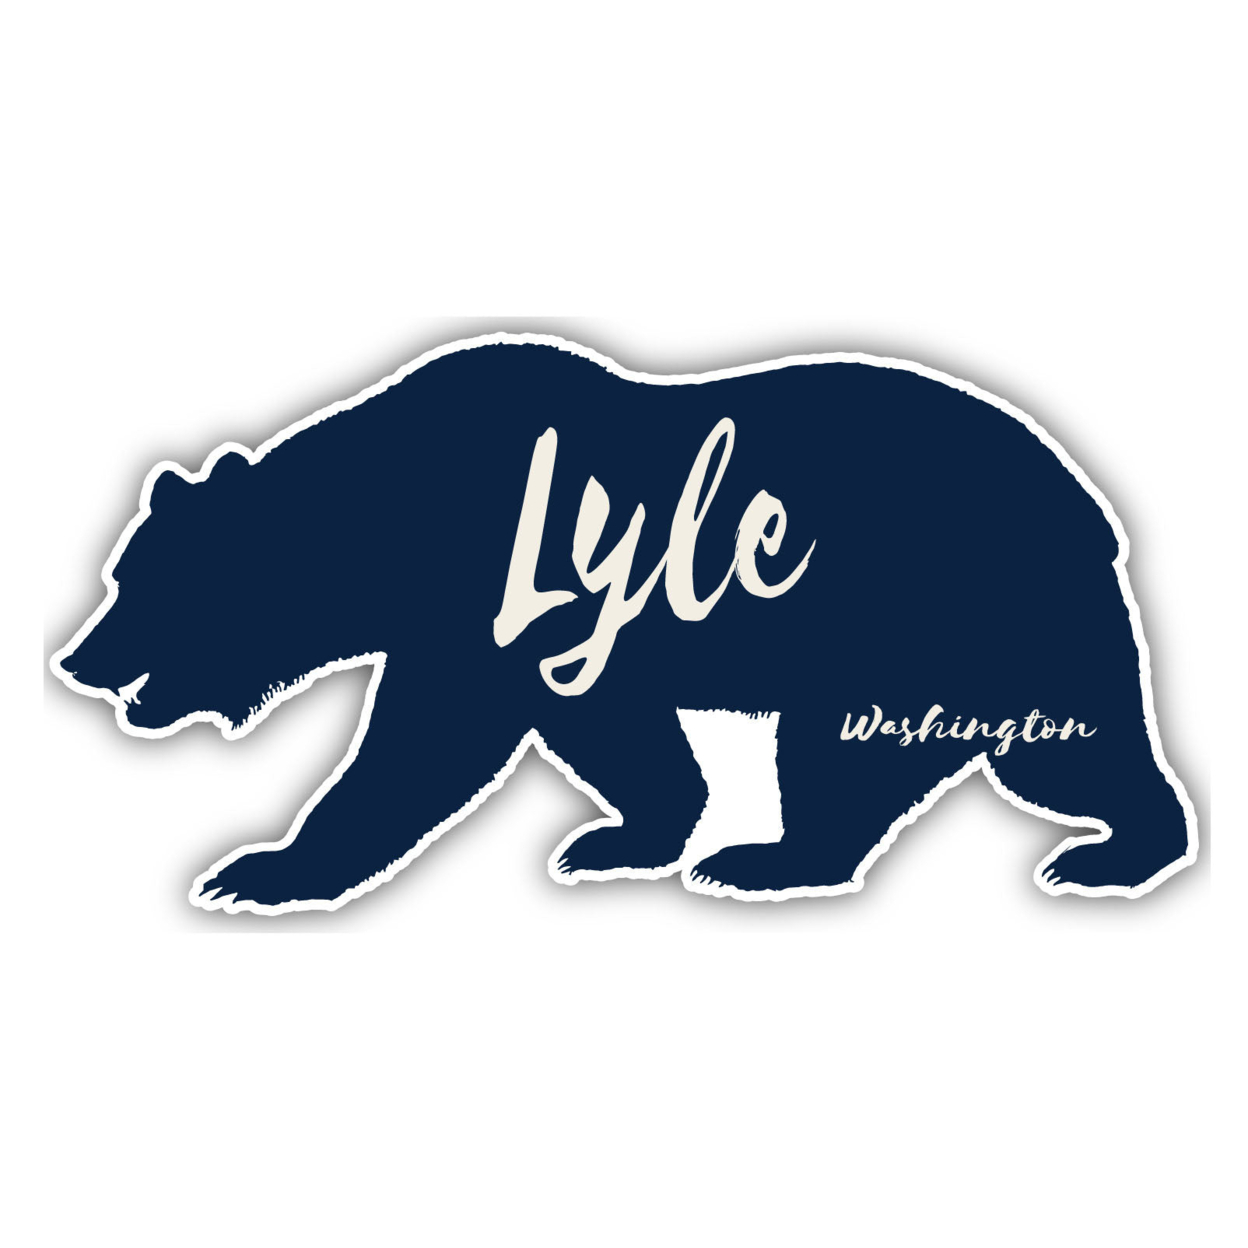 Lyle Washington Souvenir Decorative Stickers (Choose Theme And Size) - 4-Inch, Bear